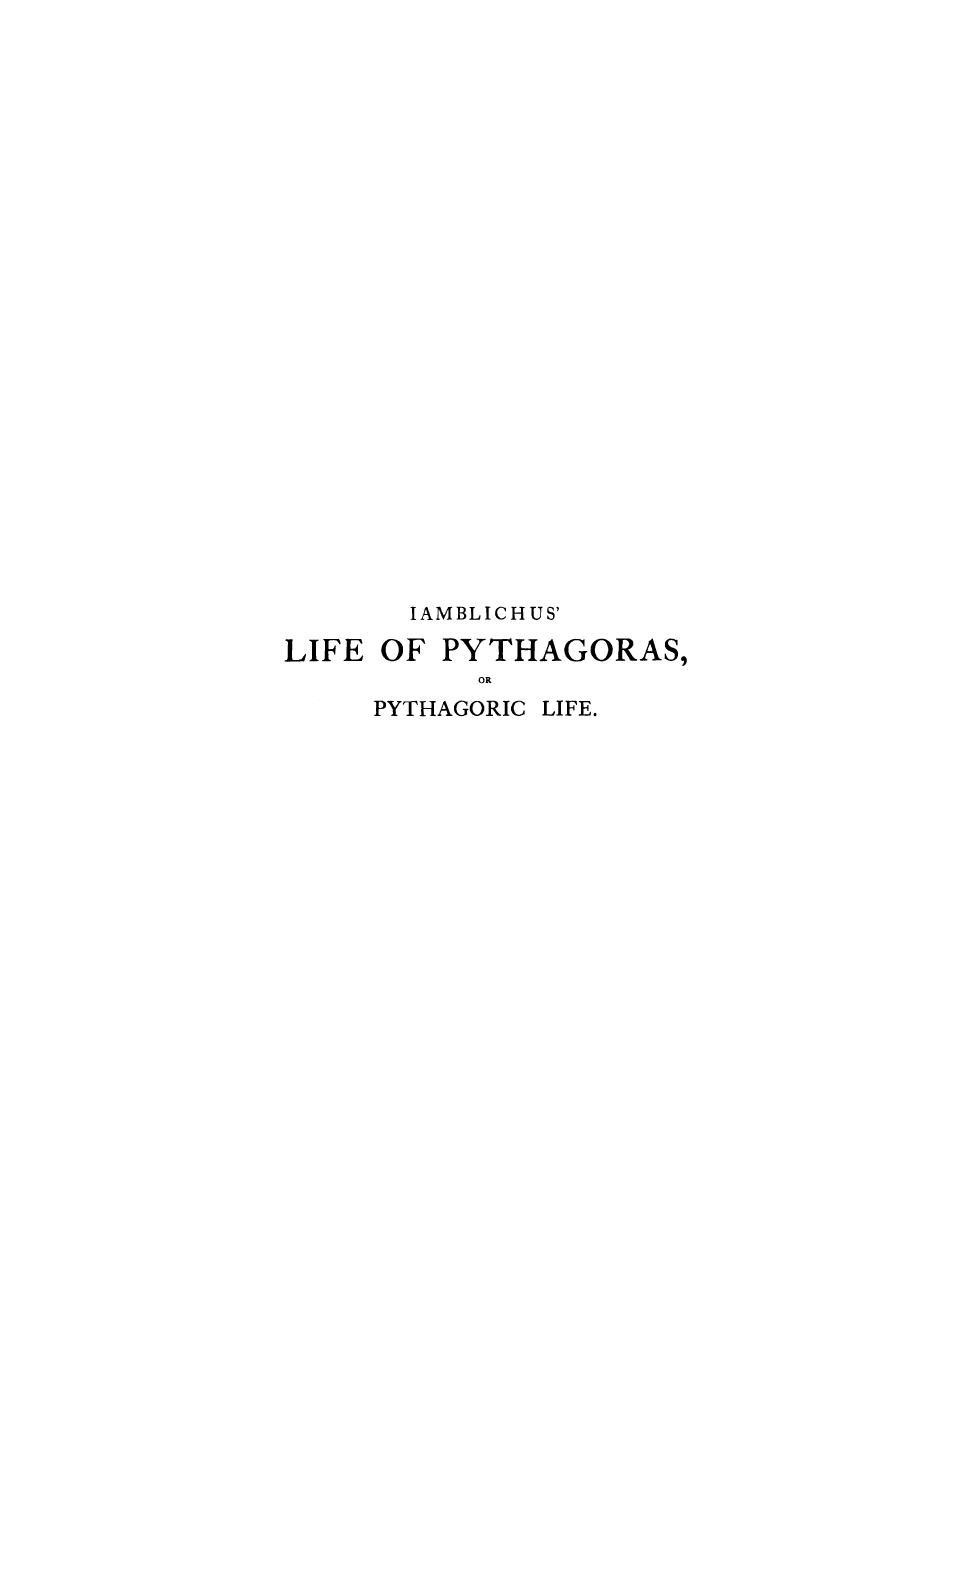 Iamblichus' Life of Pythagoras by Thomas Taylor